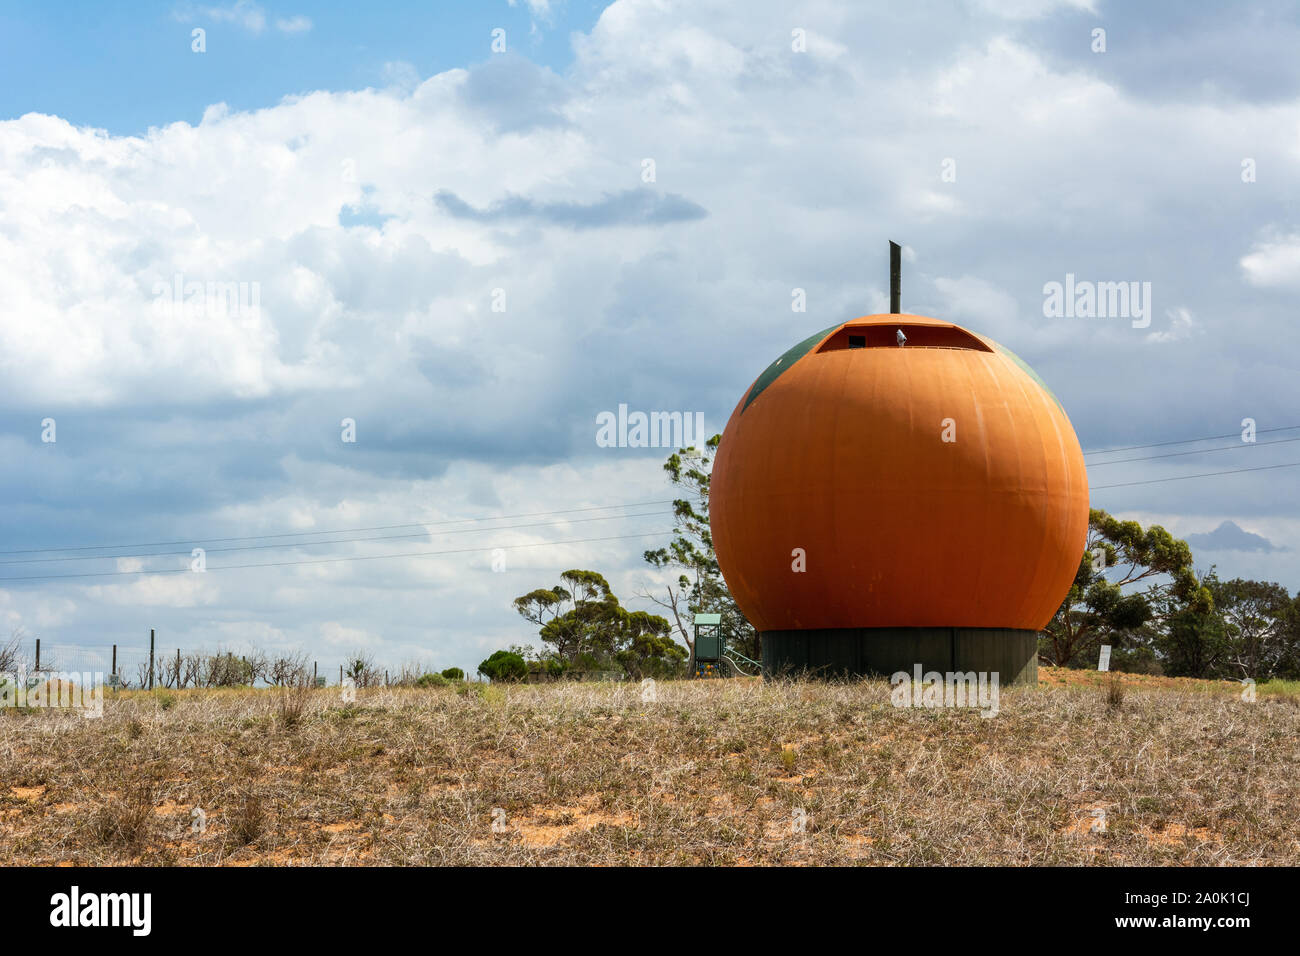 Berri, South Australia, Australia - March 13, 2017. The Big Orange in Berri, SA. Located in the South Australian Riverland, the Big Orange was designe Stock Photo